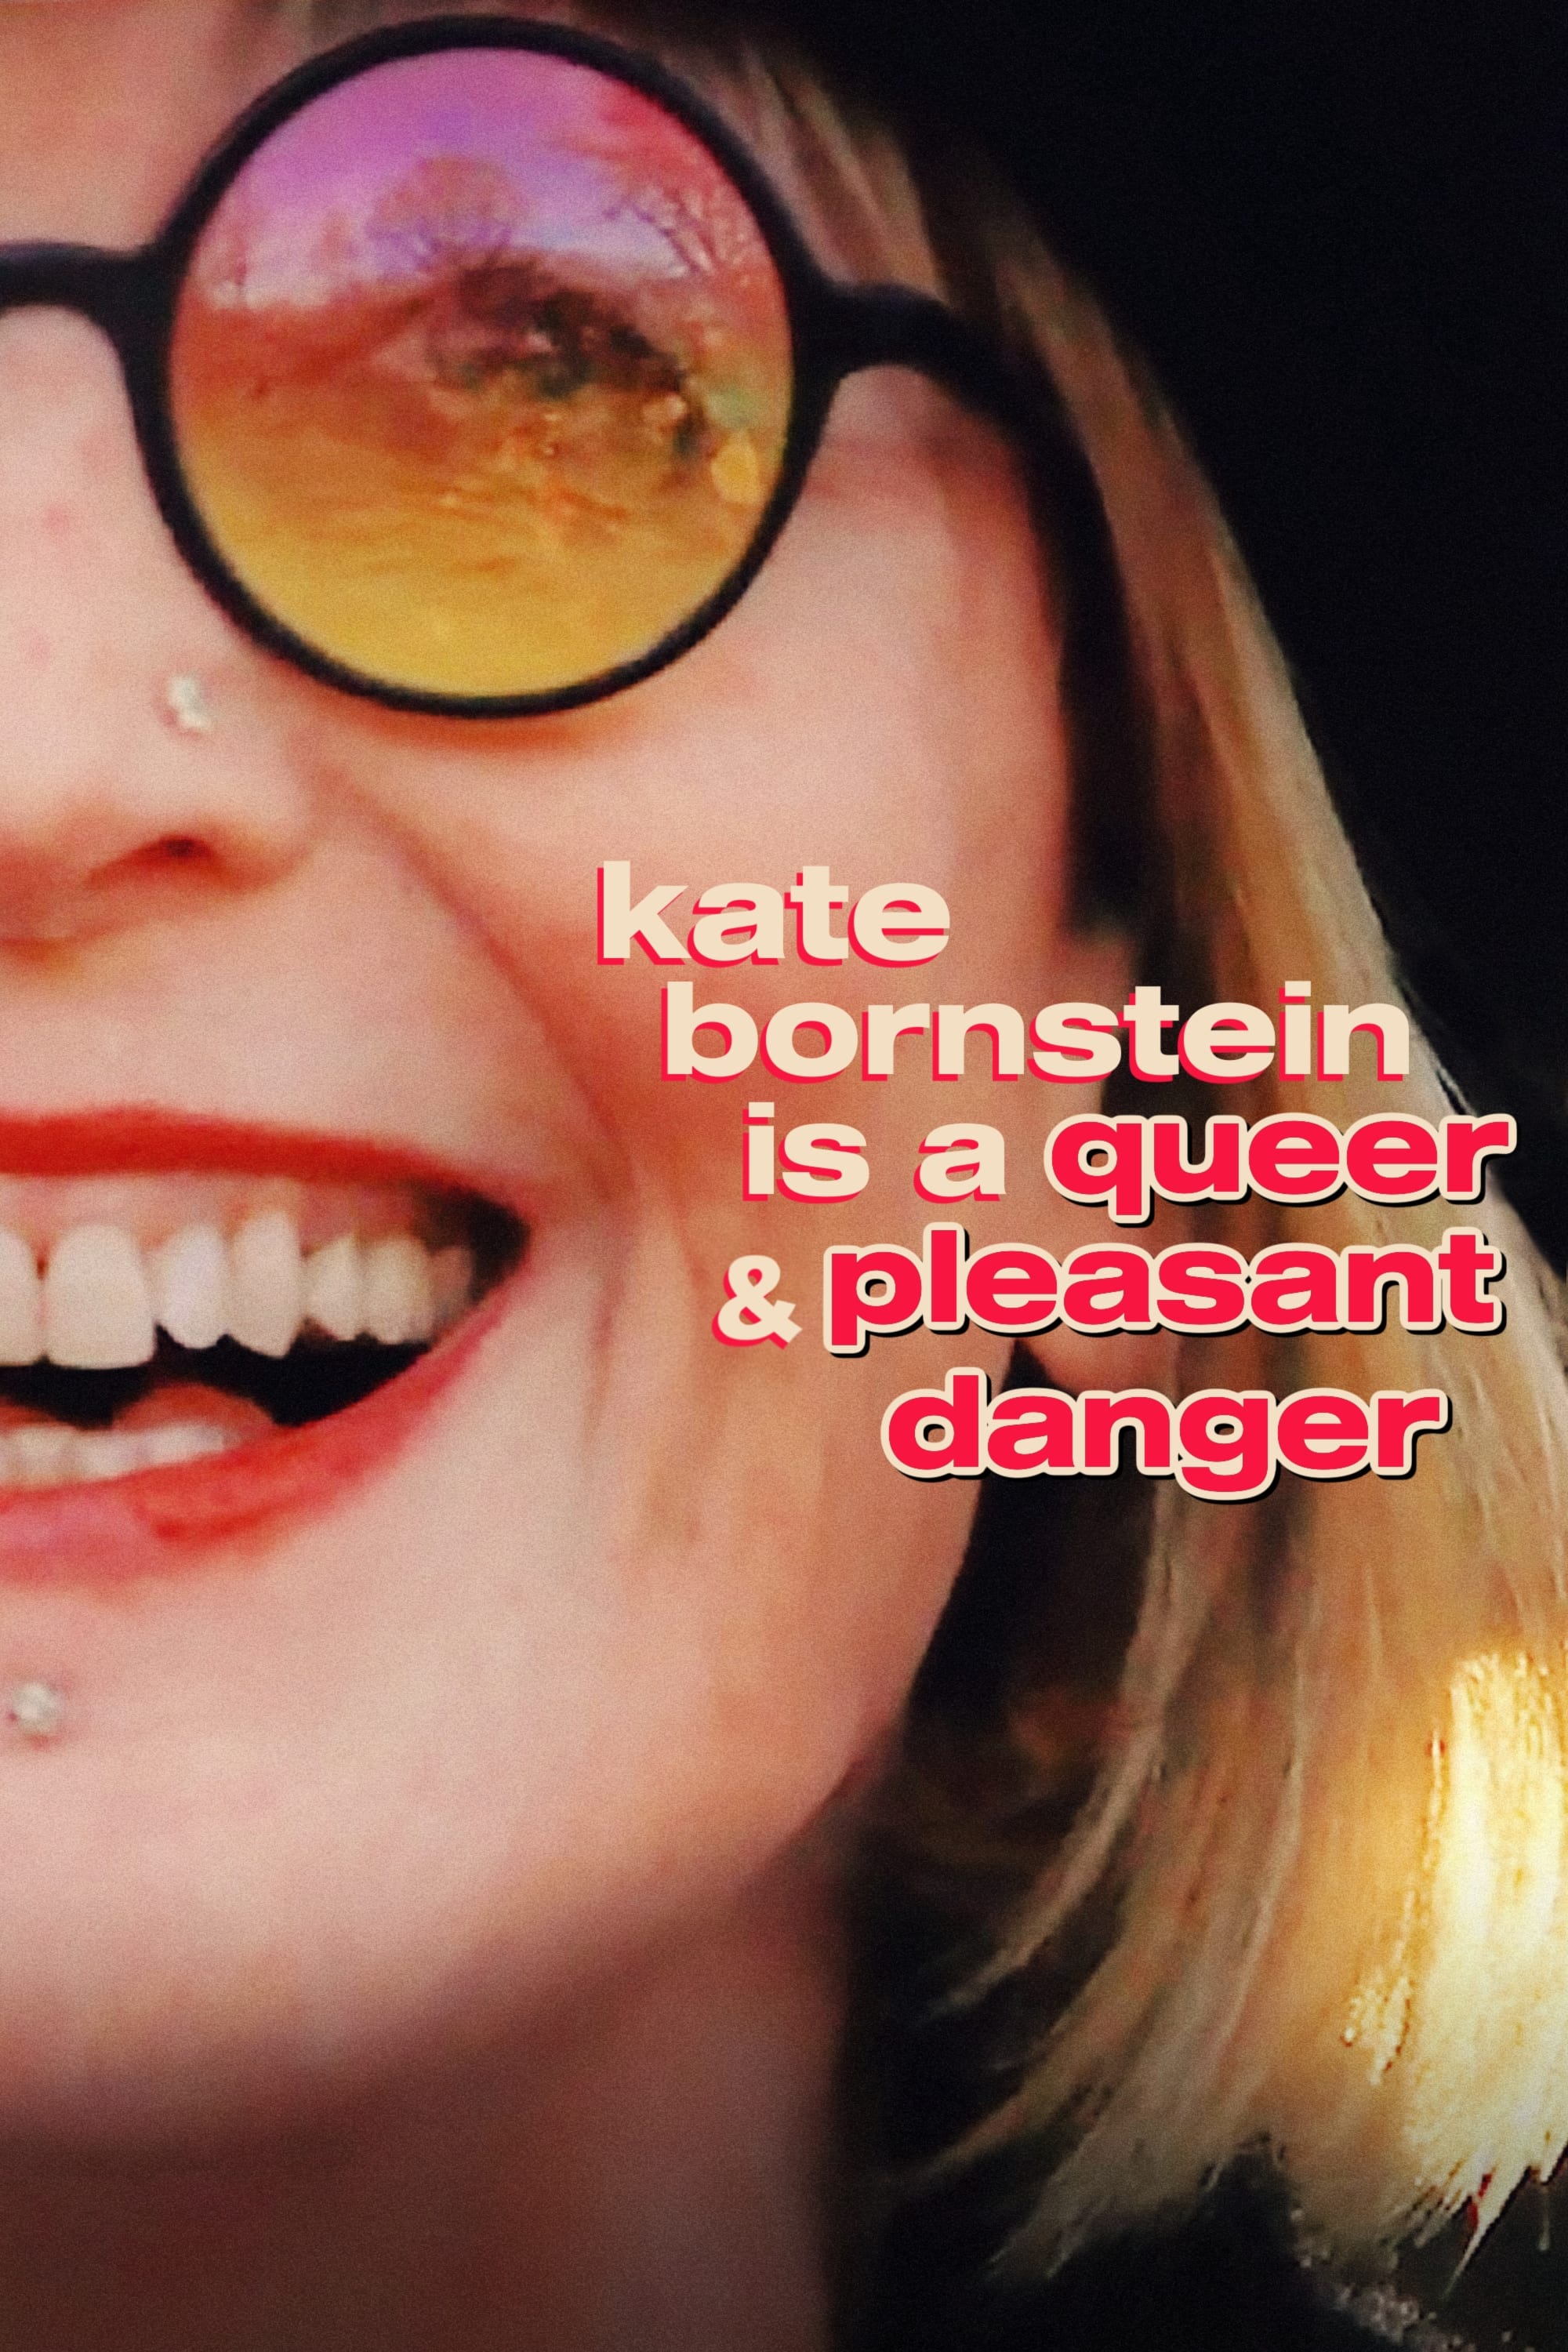 Kate Bornstein Is a Queer & Pleasant Danger